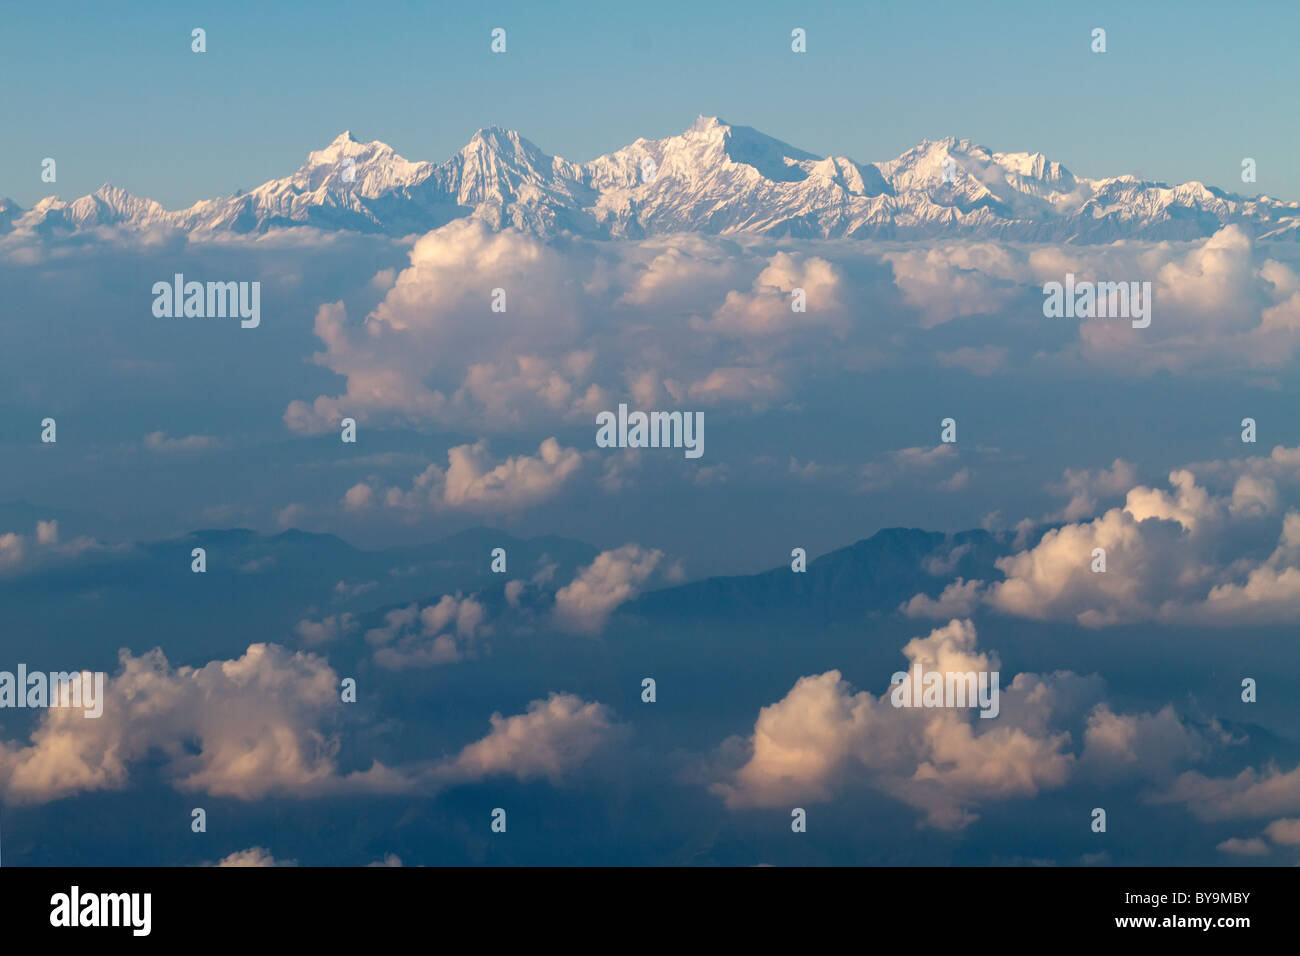 Piano vista aerea dell'himalaya tra le nuvole Foto Stock